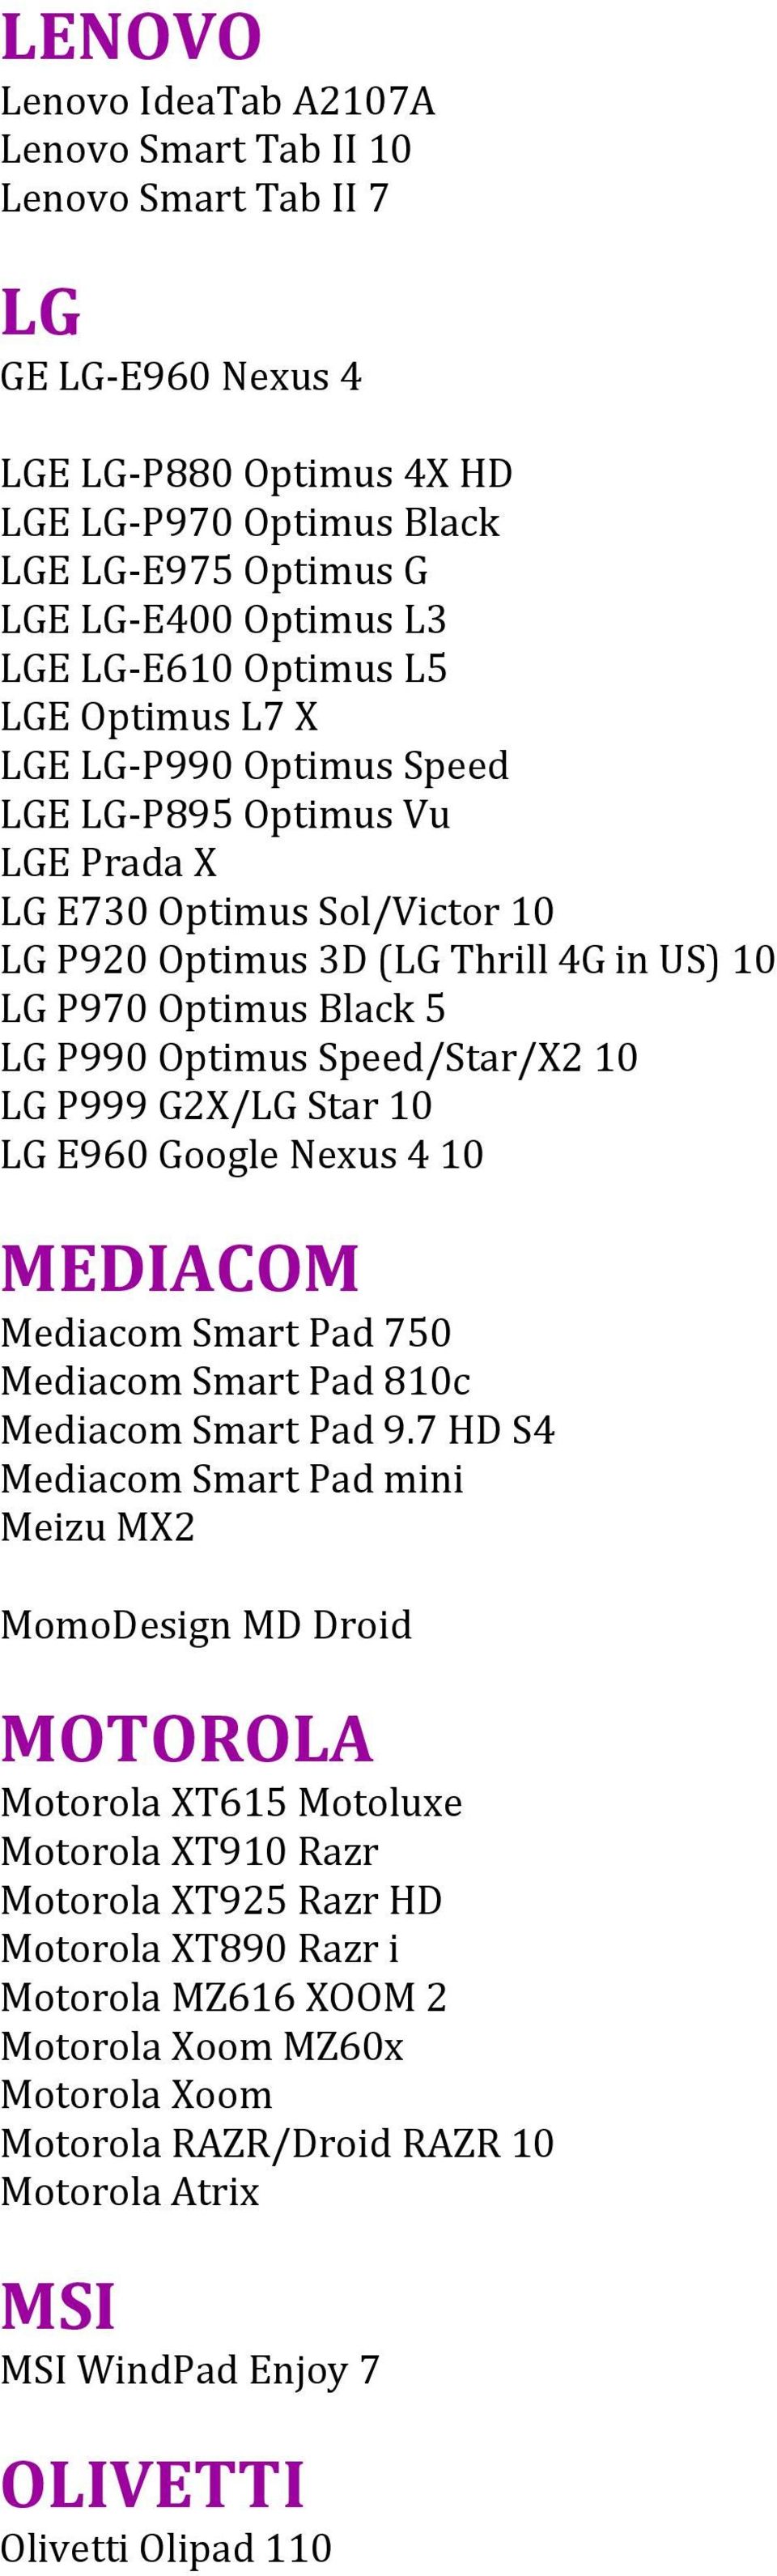 5 LG P990 Optimus Speed/Star/X2 10 LG P999 G2X/LG Star 10 LG E960 Google Nexus 4 10 MEDIACOM Mediacom Smart Pad 750 Mediacom Smart Pad 810c Mediacom Smart Pad 9.